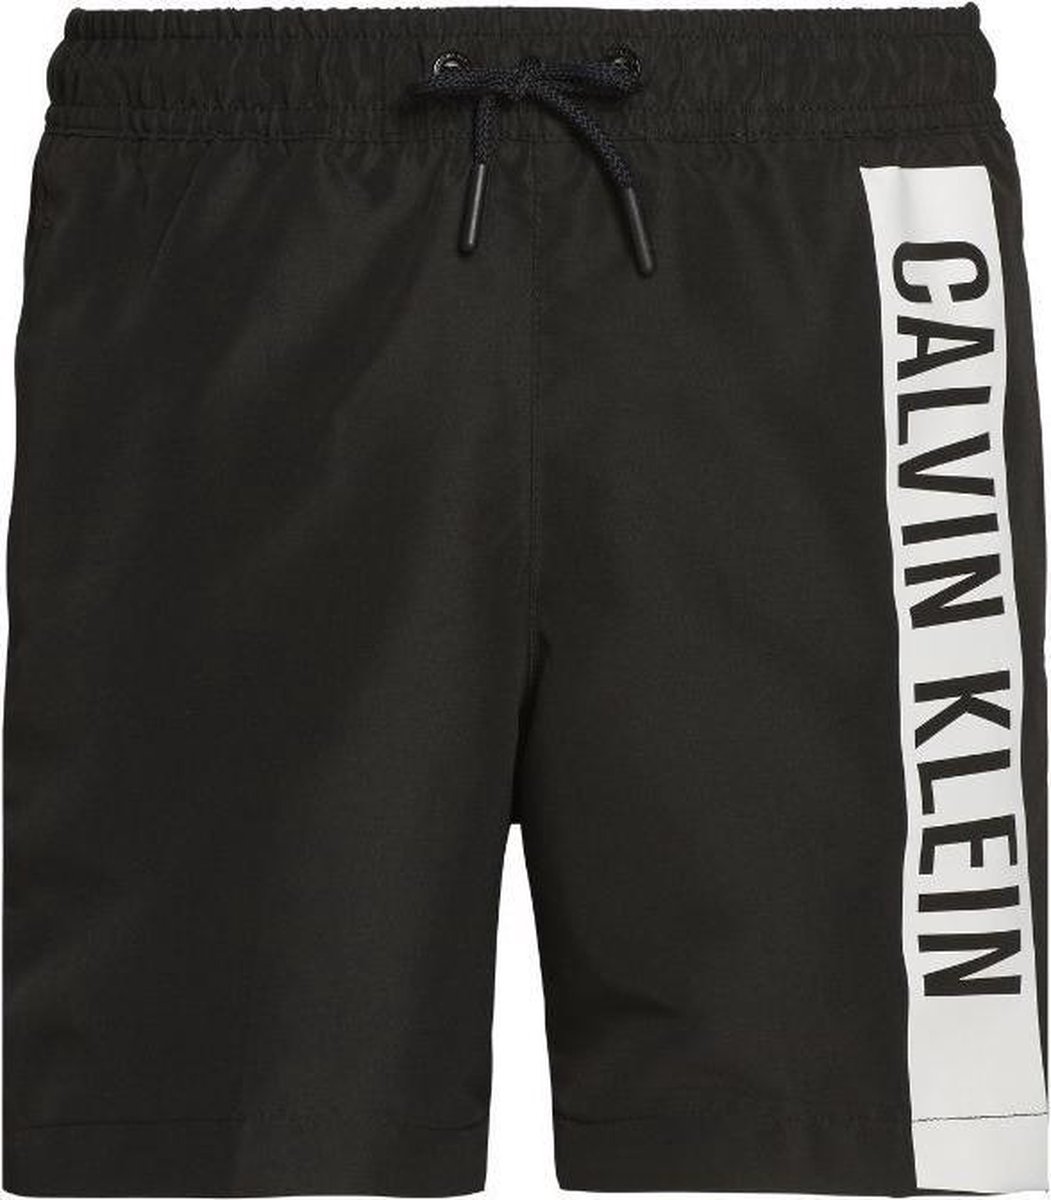 Calvin zwembroek -zwart/wit logo | bol.com